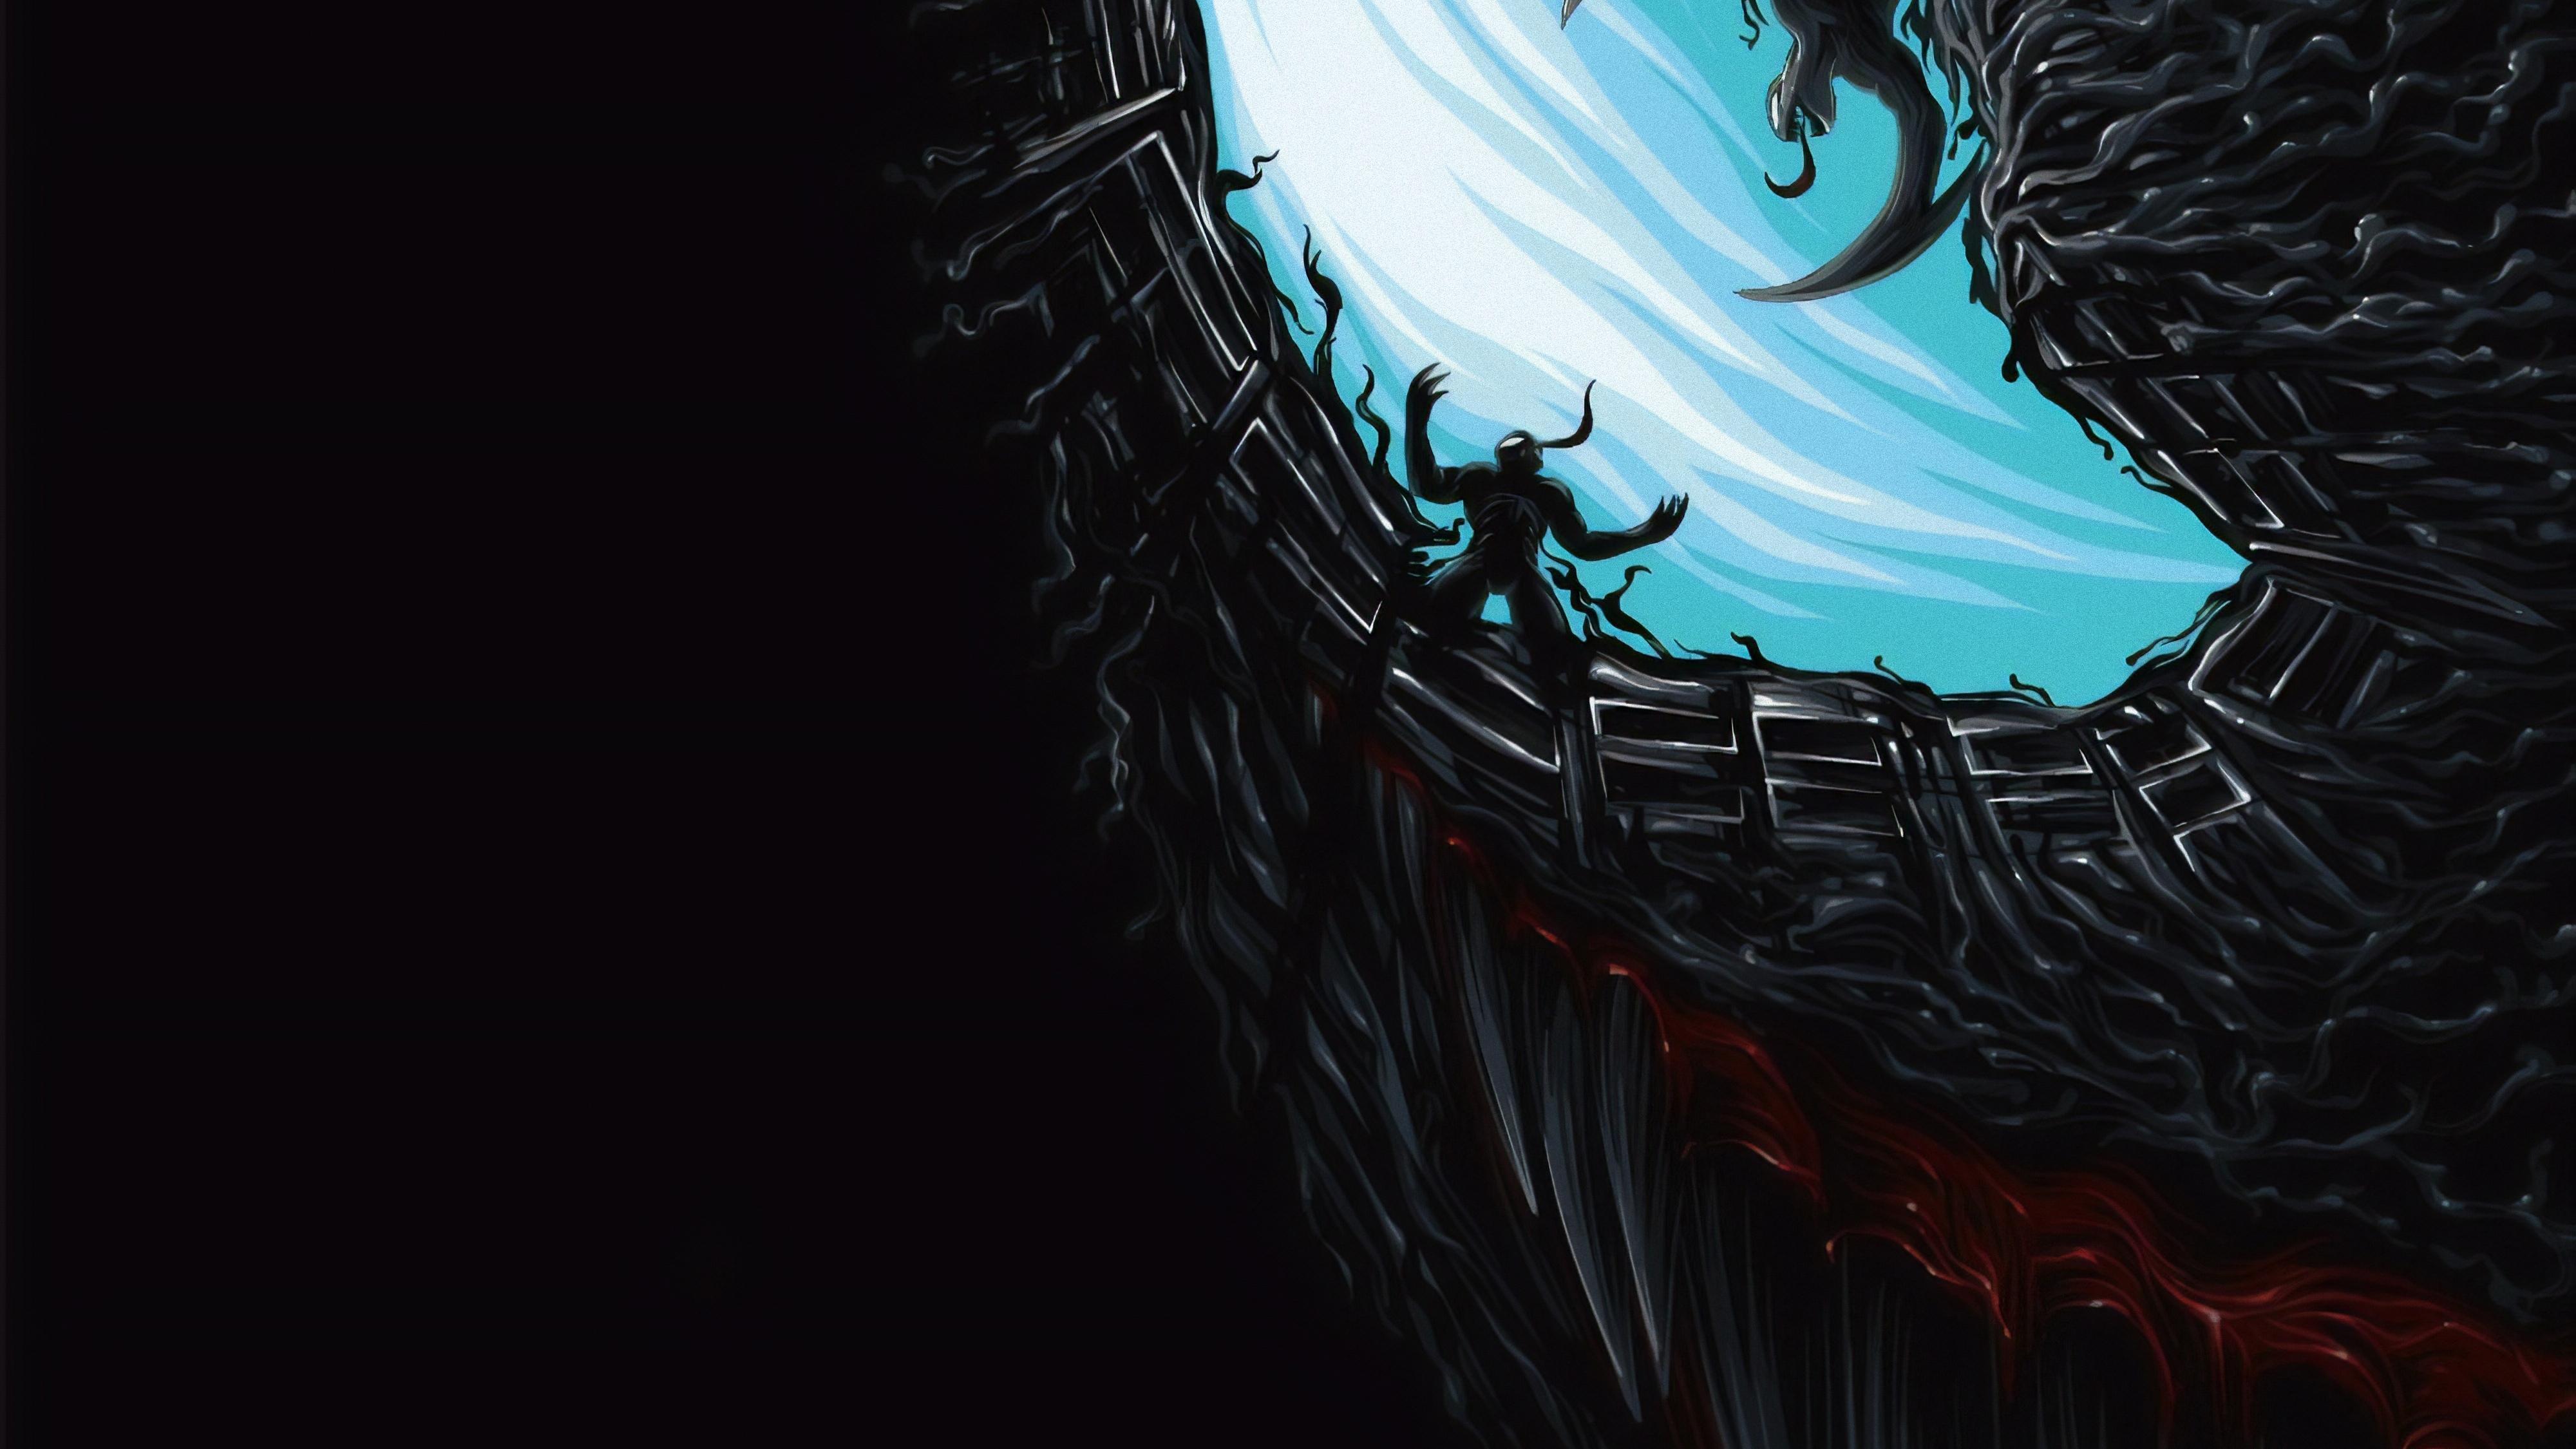 Venom, Riot (Marvel Comics) wallpaper and background